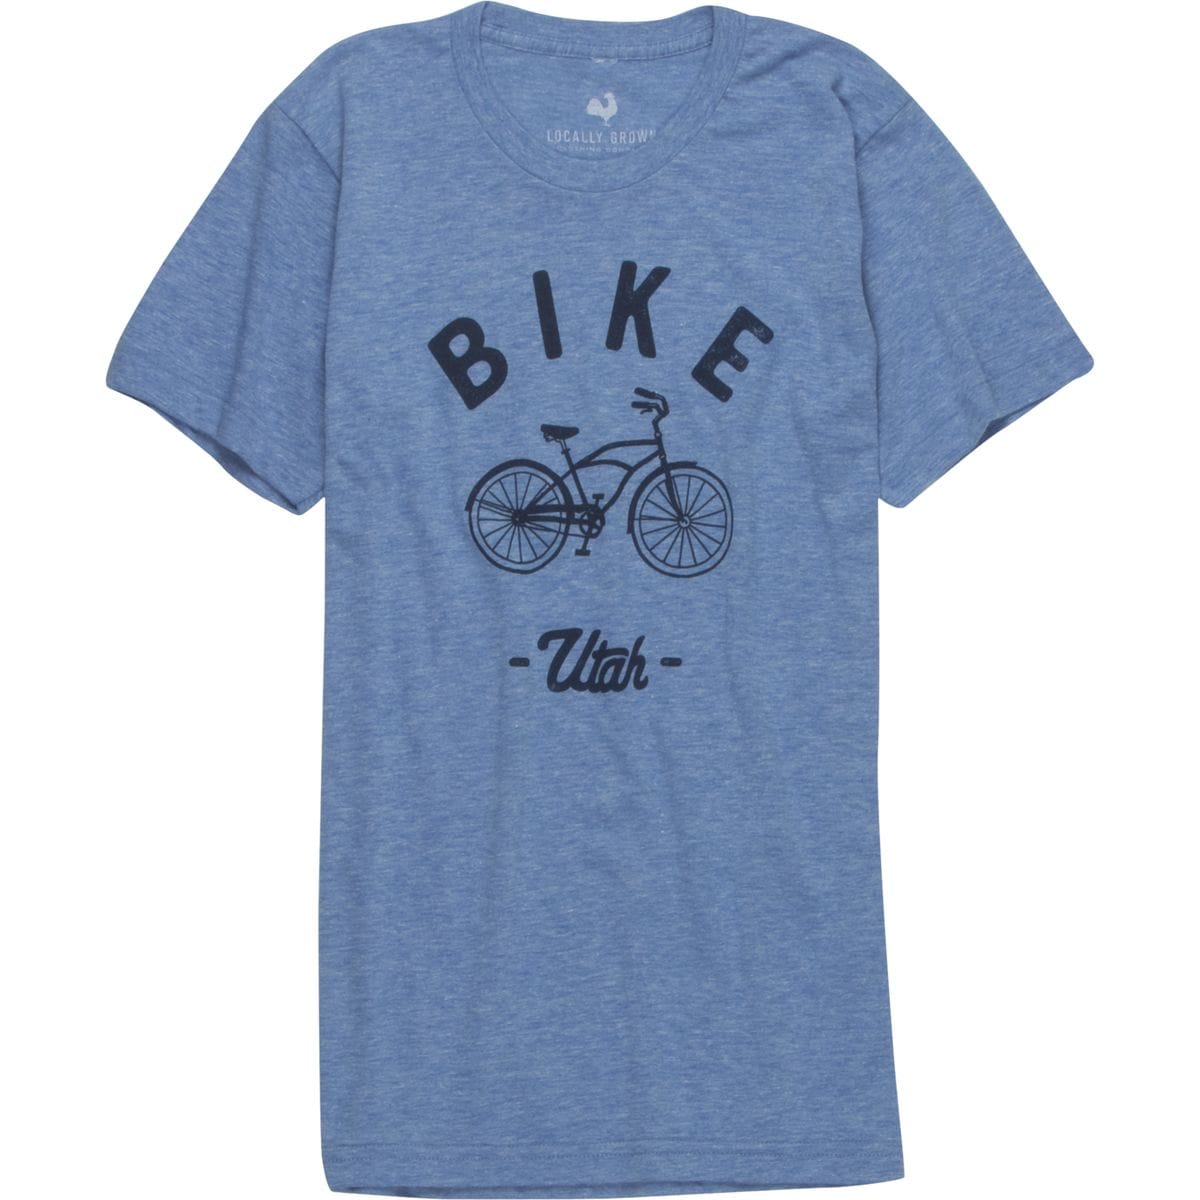 Locally Grown Bike Cruiser Utah Tri-Blend Vintage T-Shirt - Short-Sleeve - Men's Heather Blue/Navy, XL